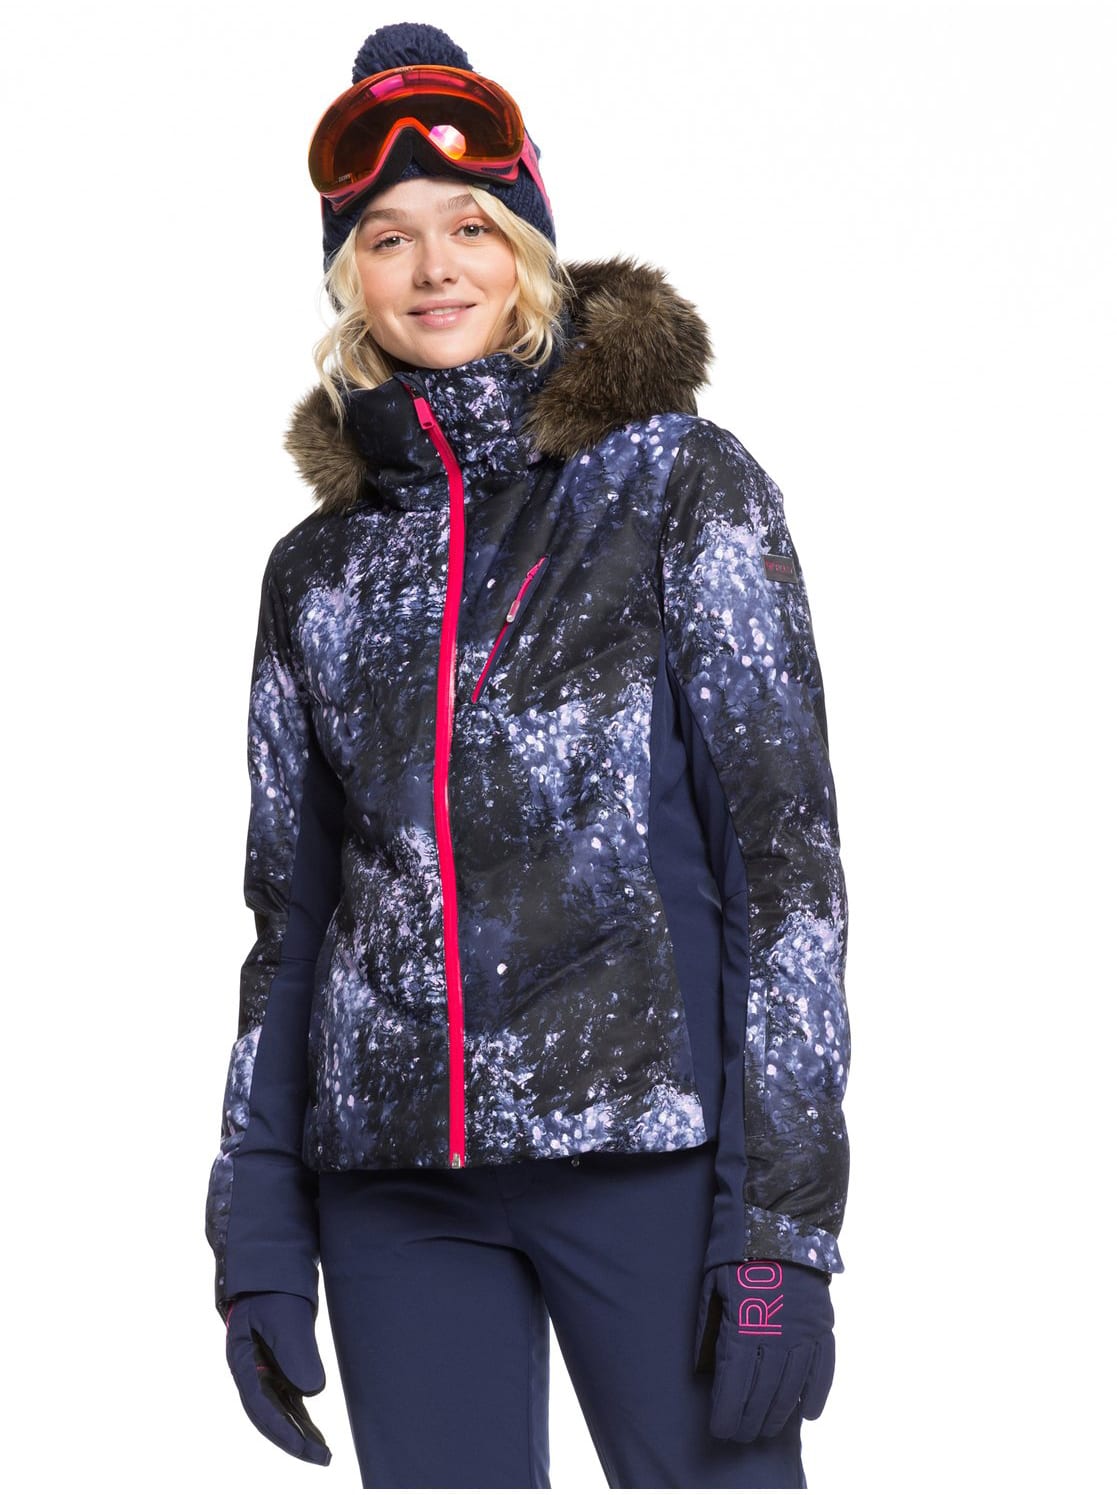 Hot Sale Roxy Snowstorm Plus at glamor | sale hot Jacket model Snowboard Womens